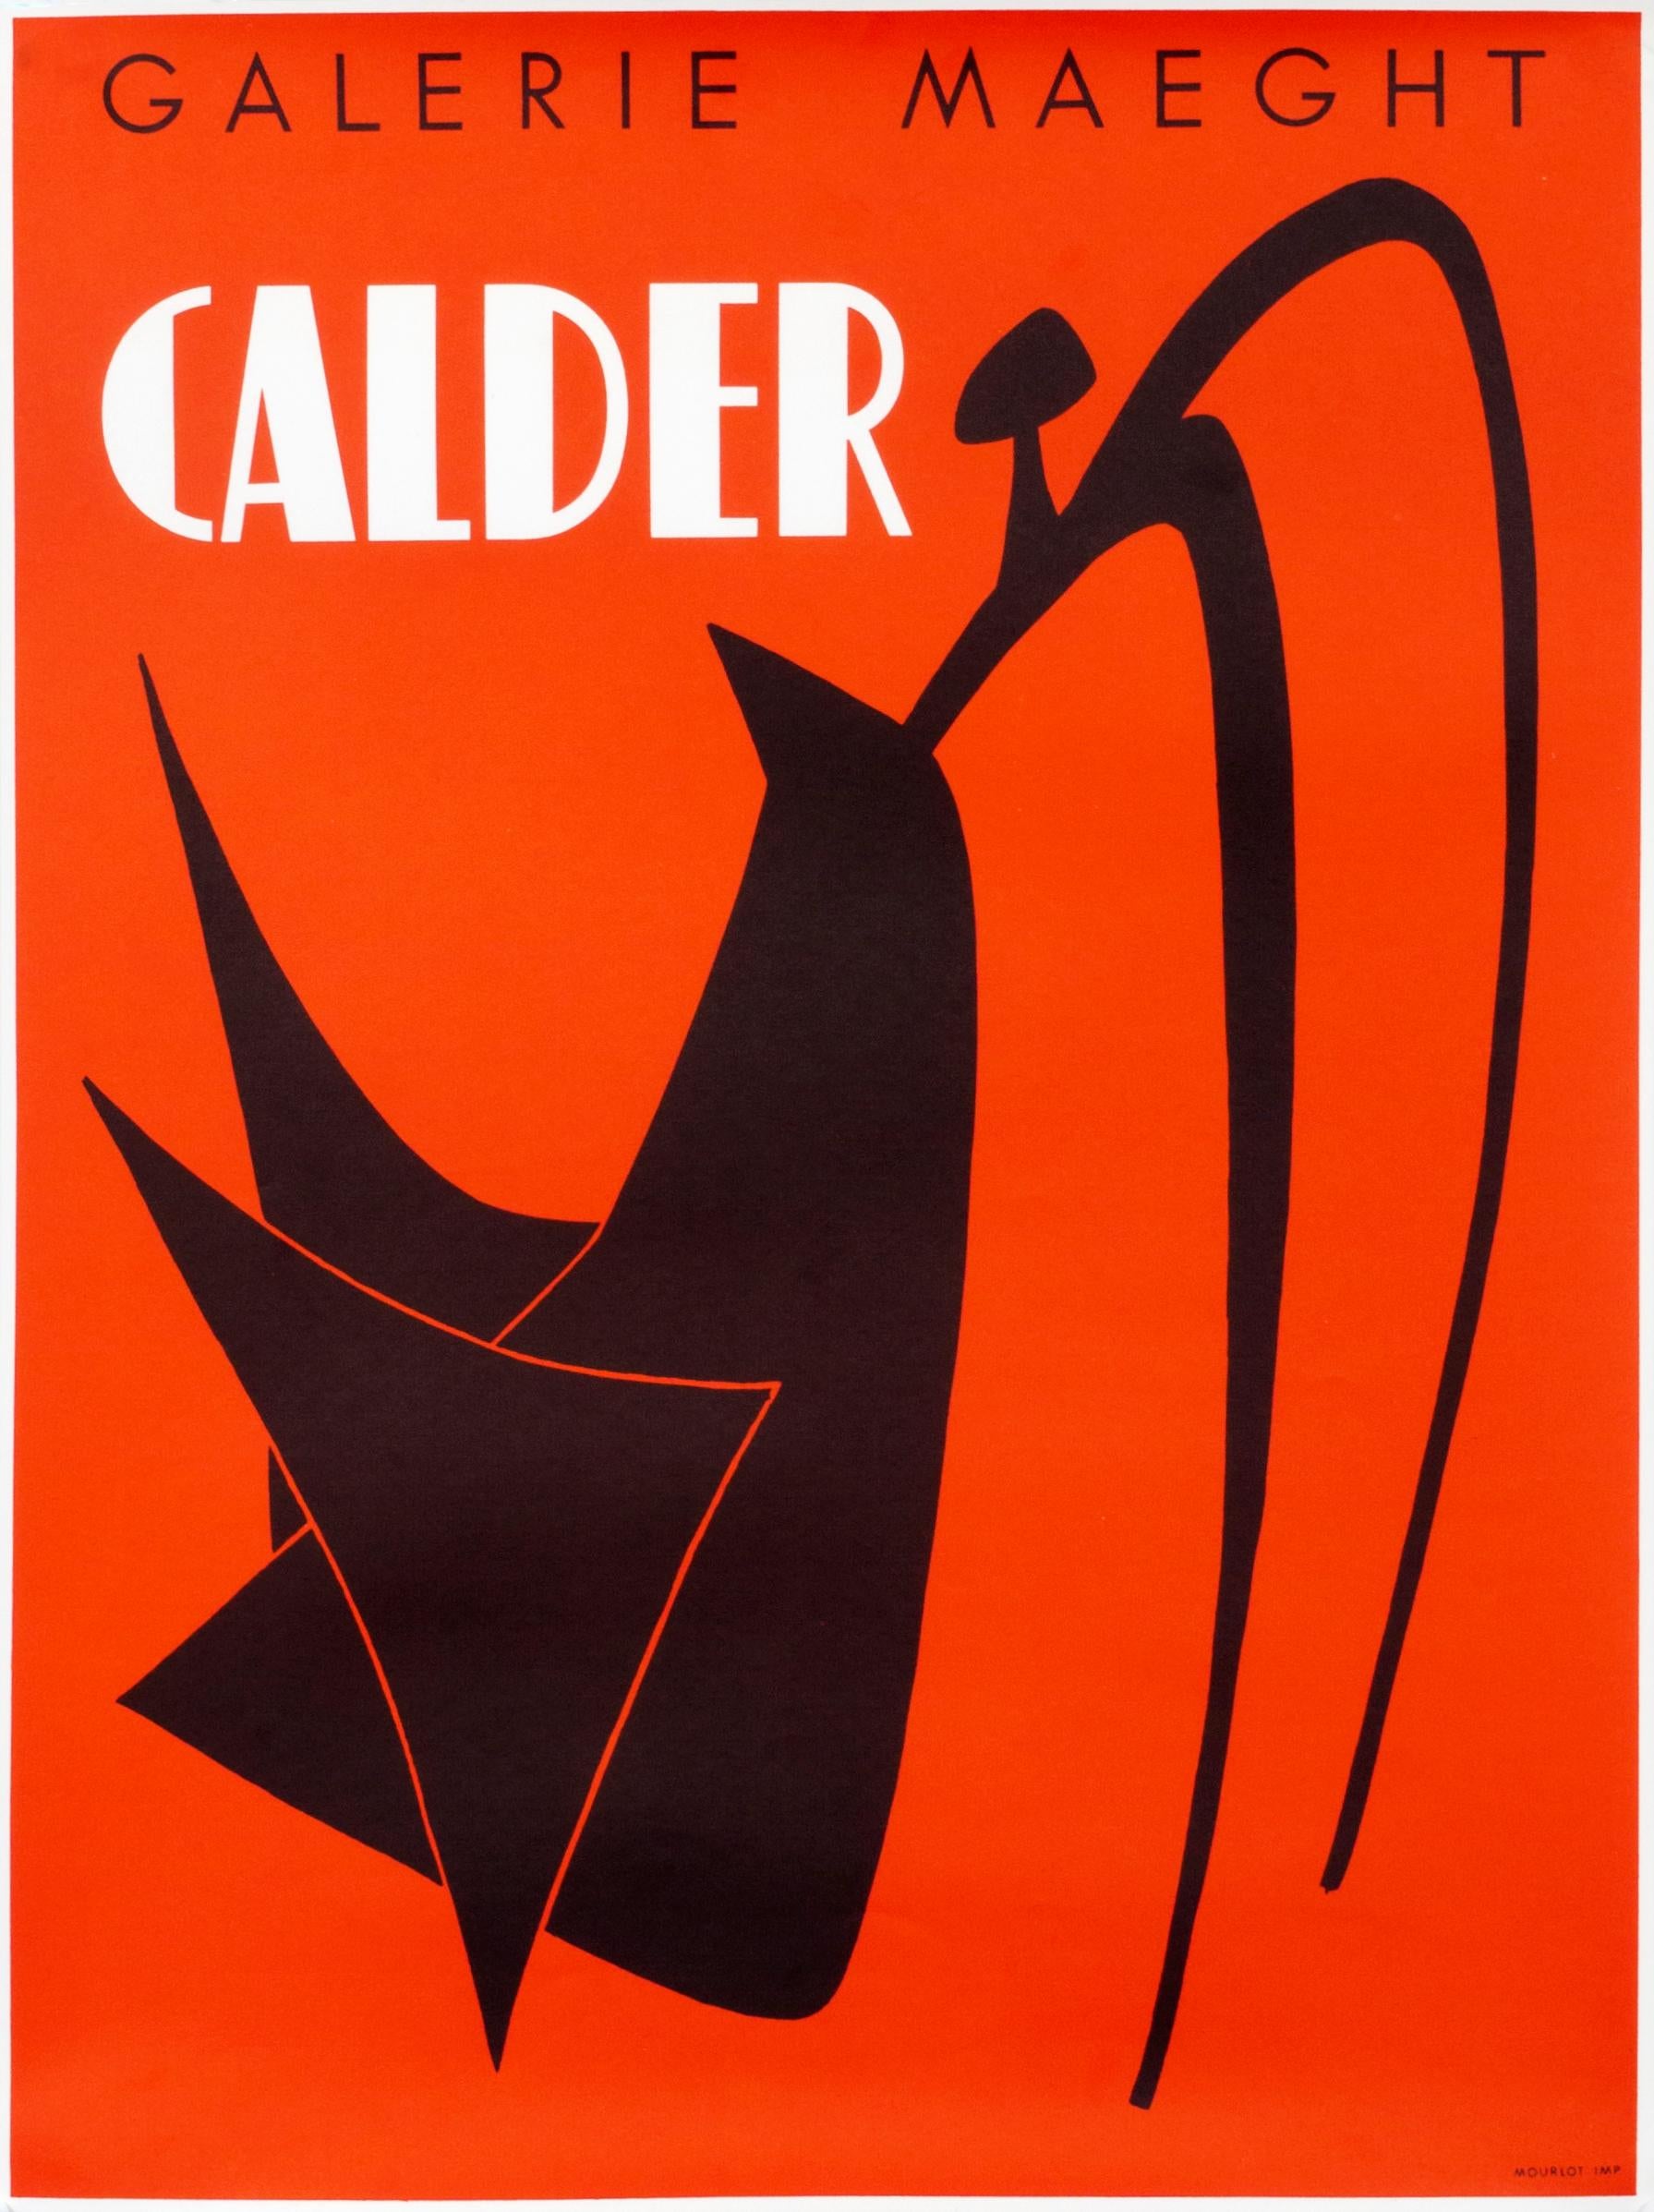 "Calder (stabile) - Galerie Maeght" Original French Art Exhibition Poster 1950s - Print by Alexander Calder